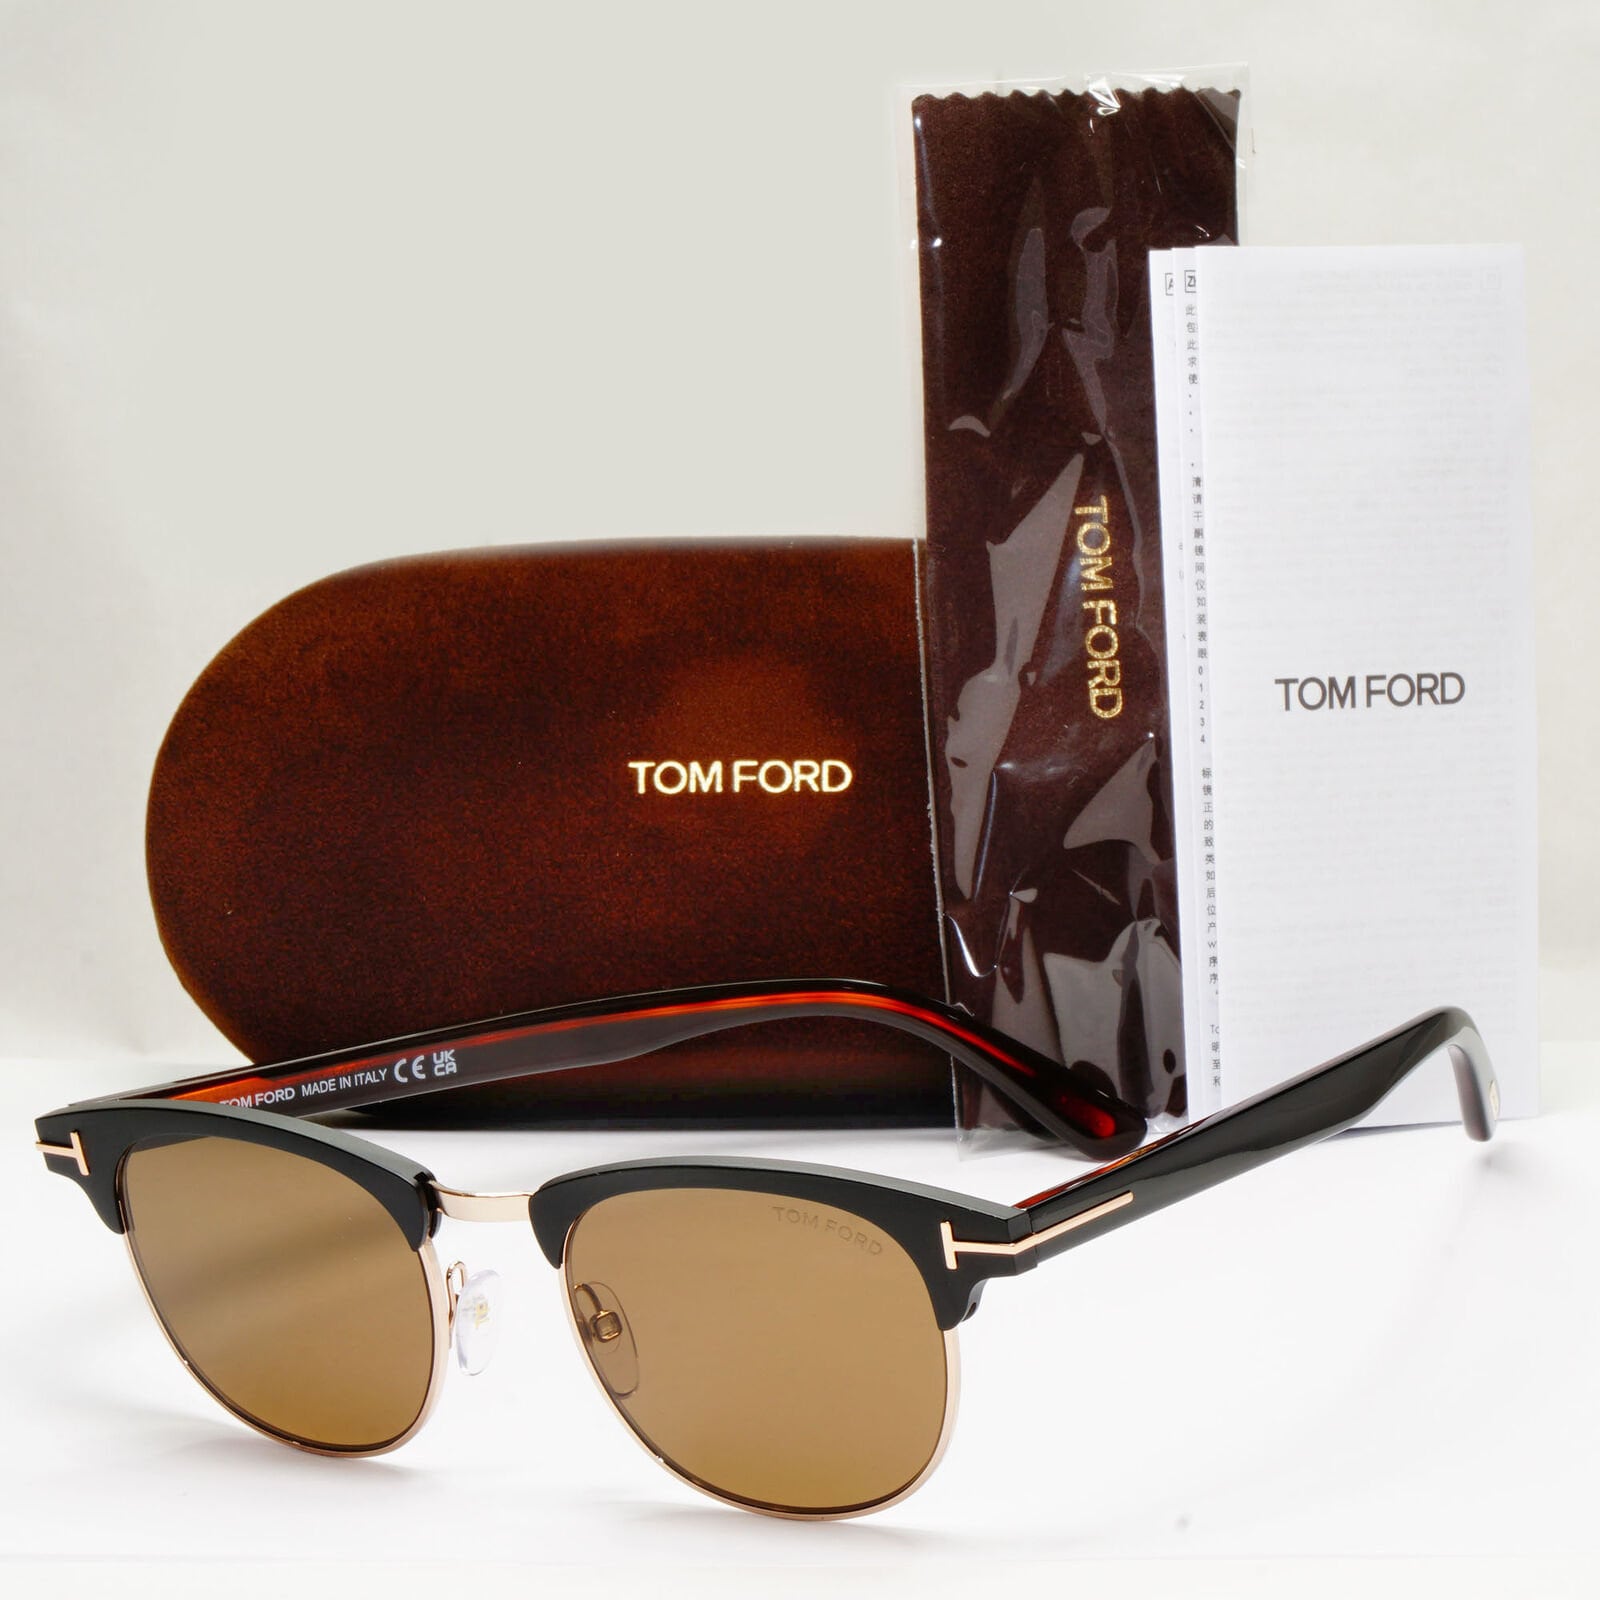 Tom Ford Sunglasses - Etsy